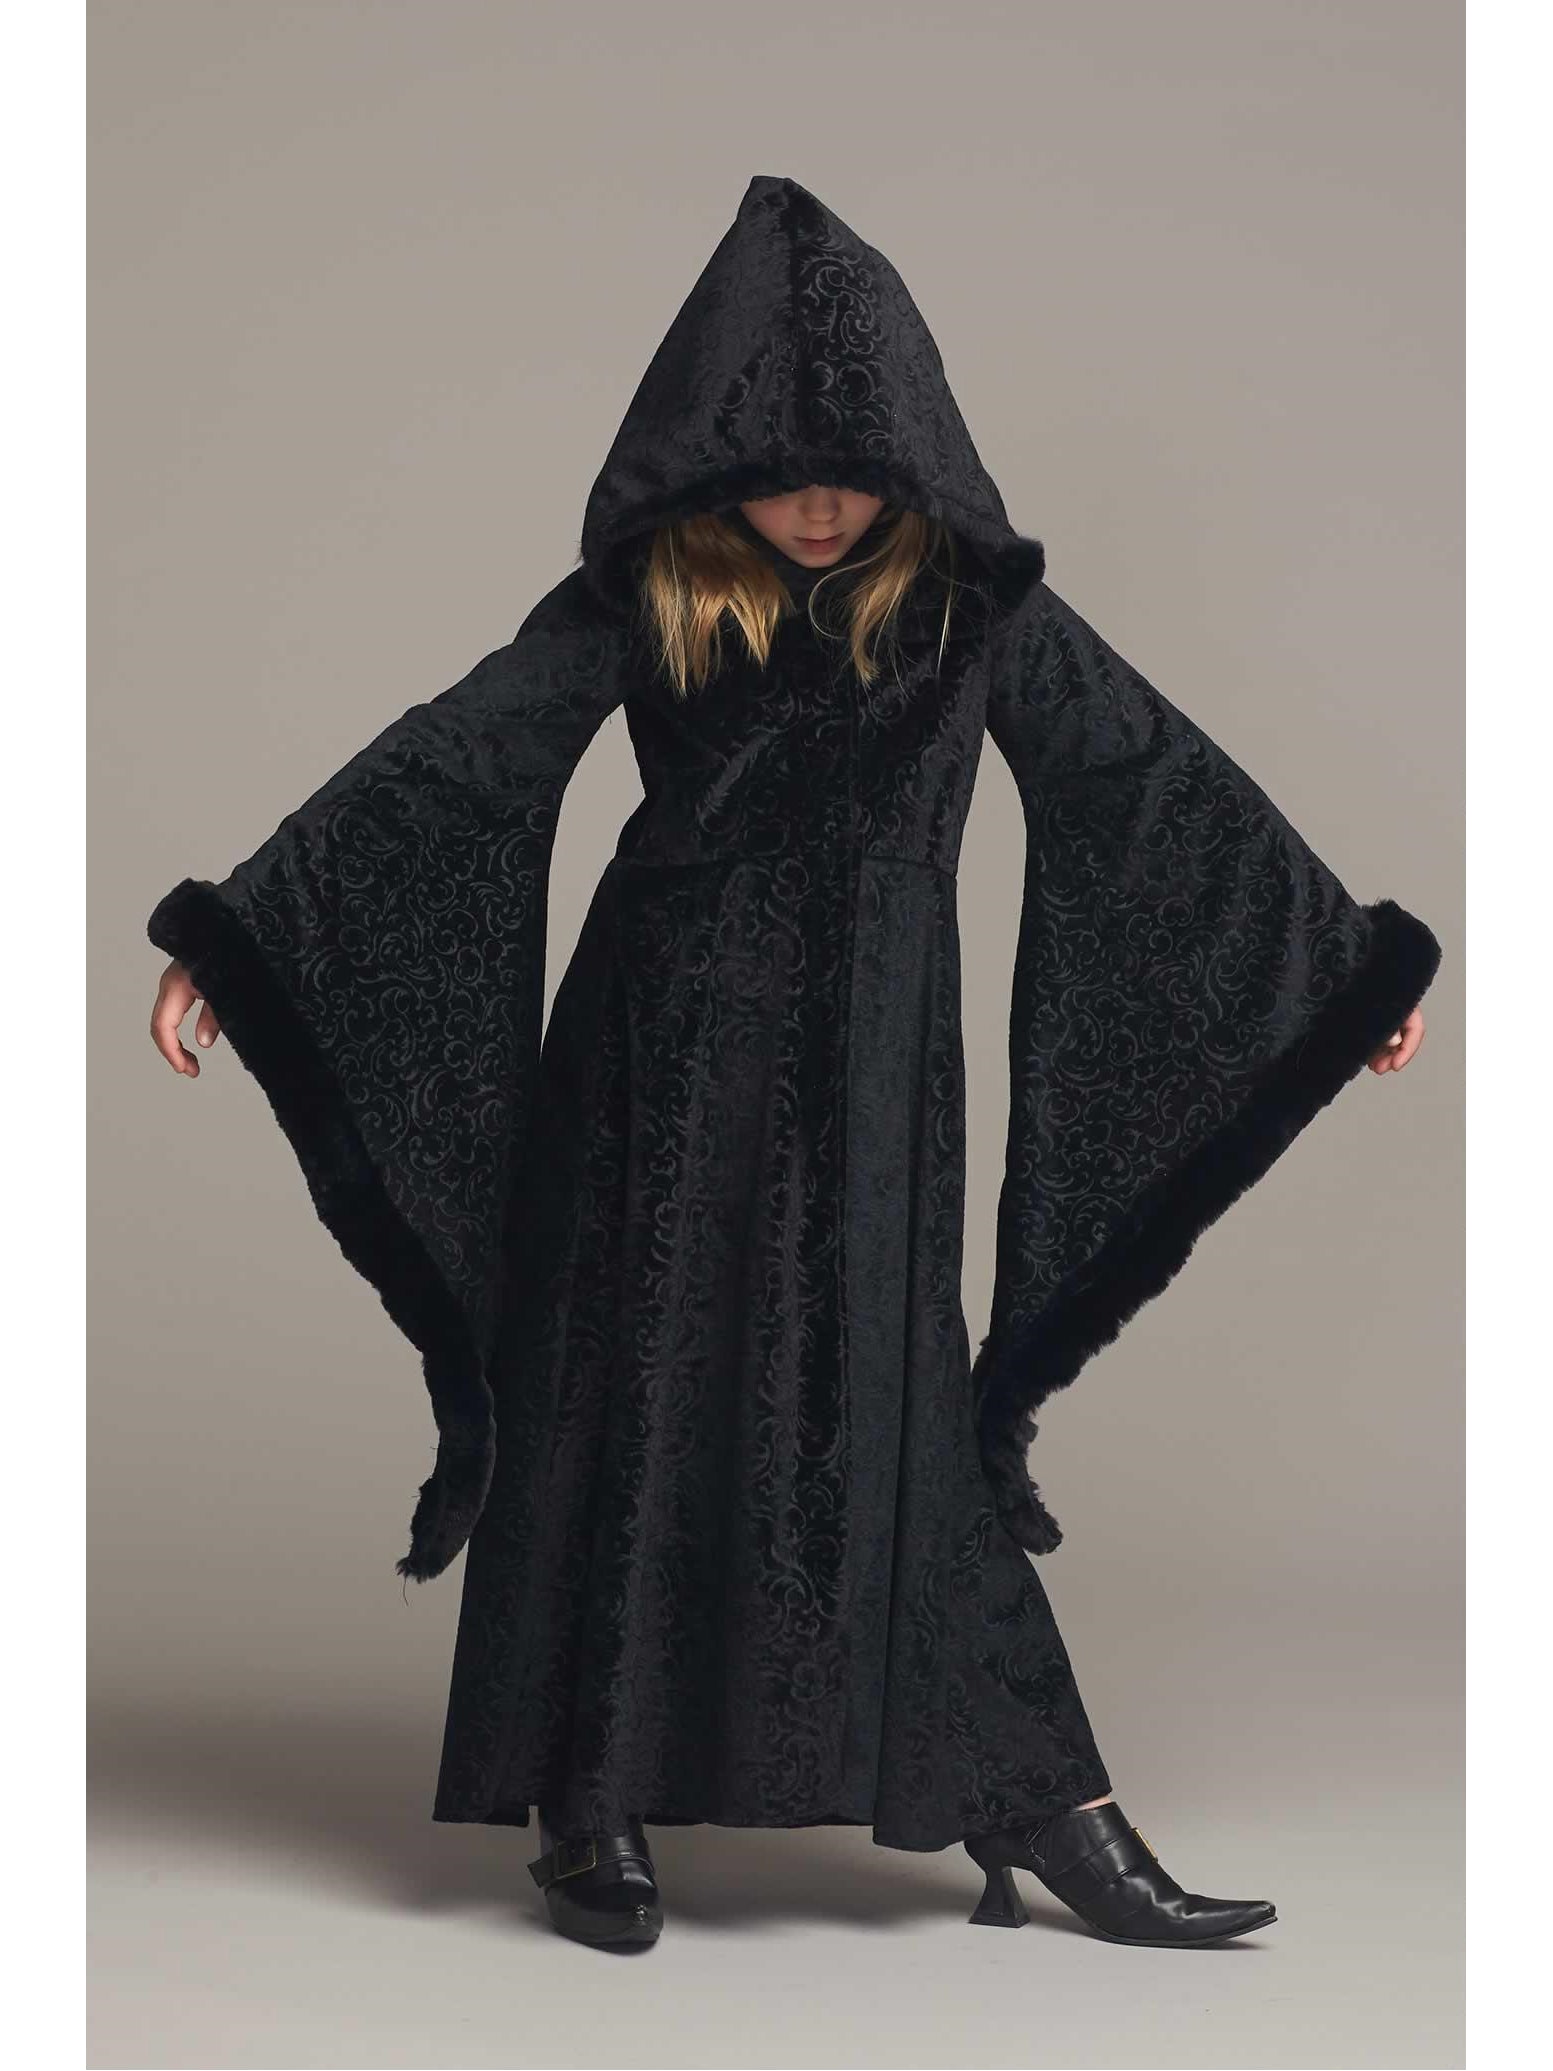 Black Cloak Costume for Girls